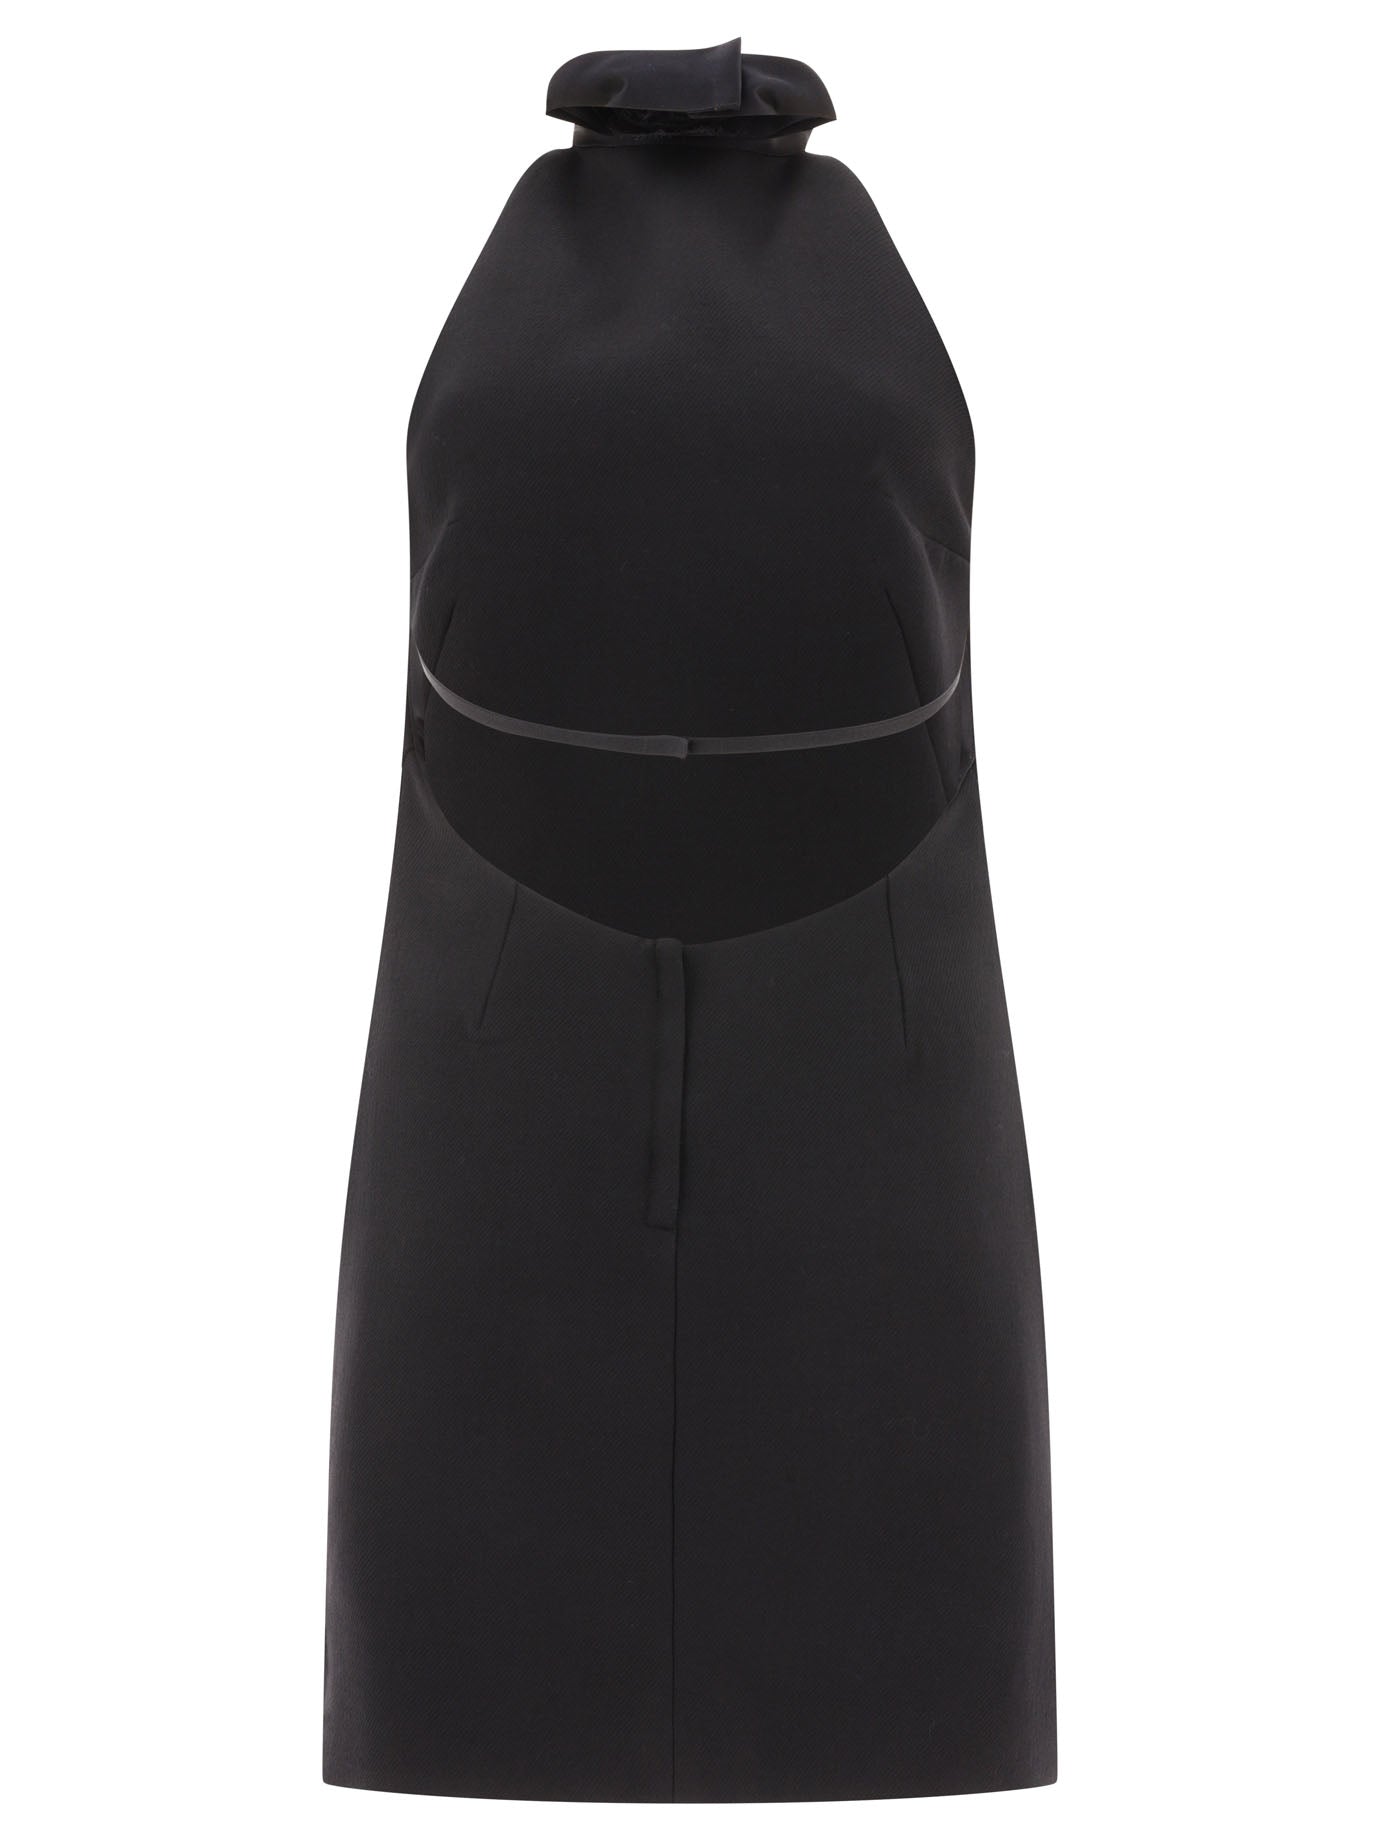 Shop Dolce & Gabbana Elegant Black Woolen Dress For Women With Rear Neckline